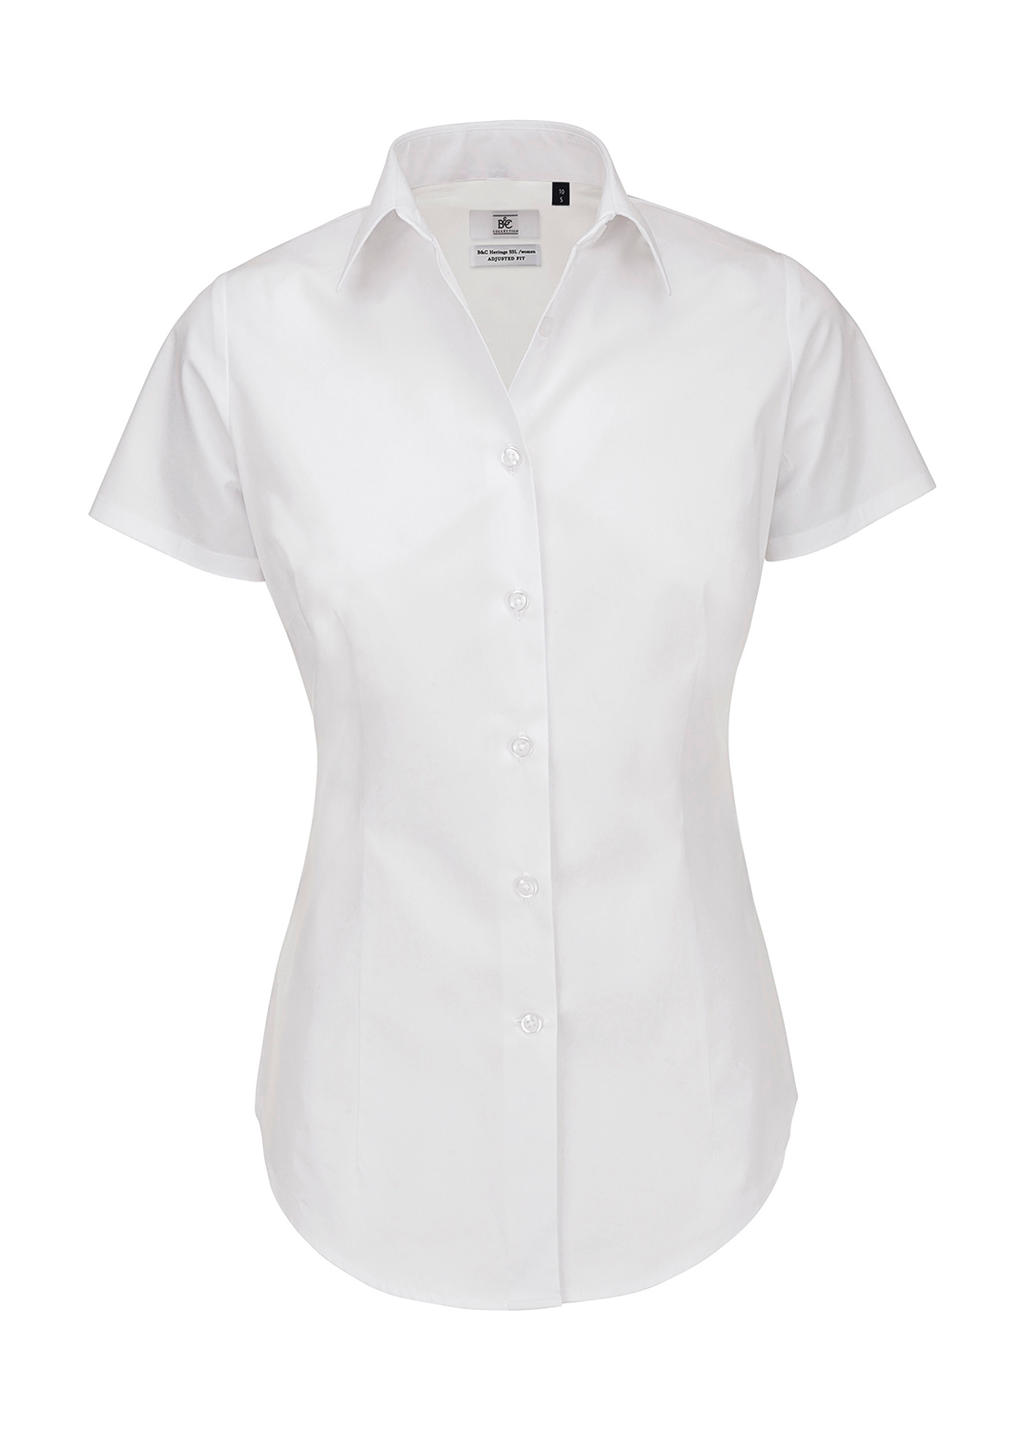  Ladies Heritage Poplin Shirt - SWP44 in Farbe White